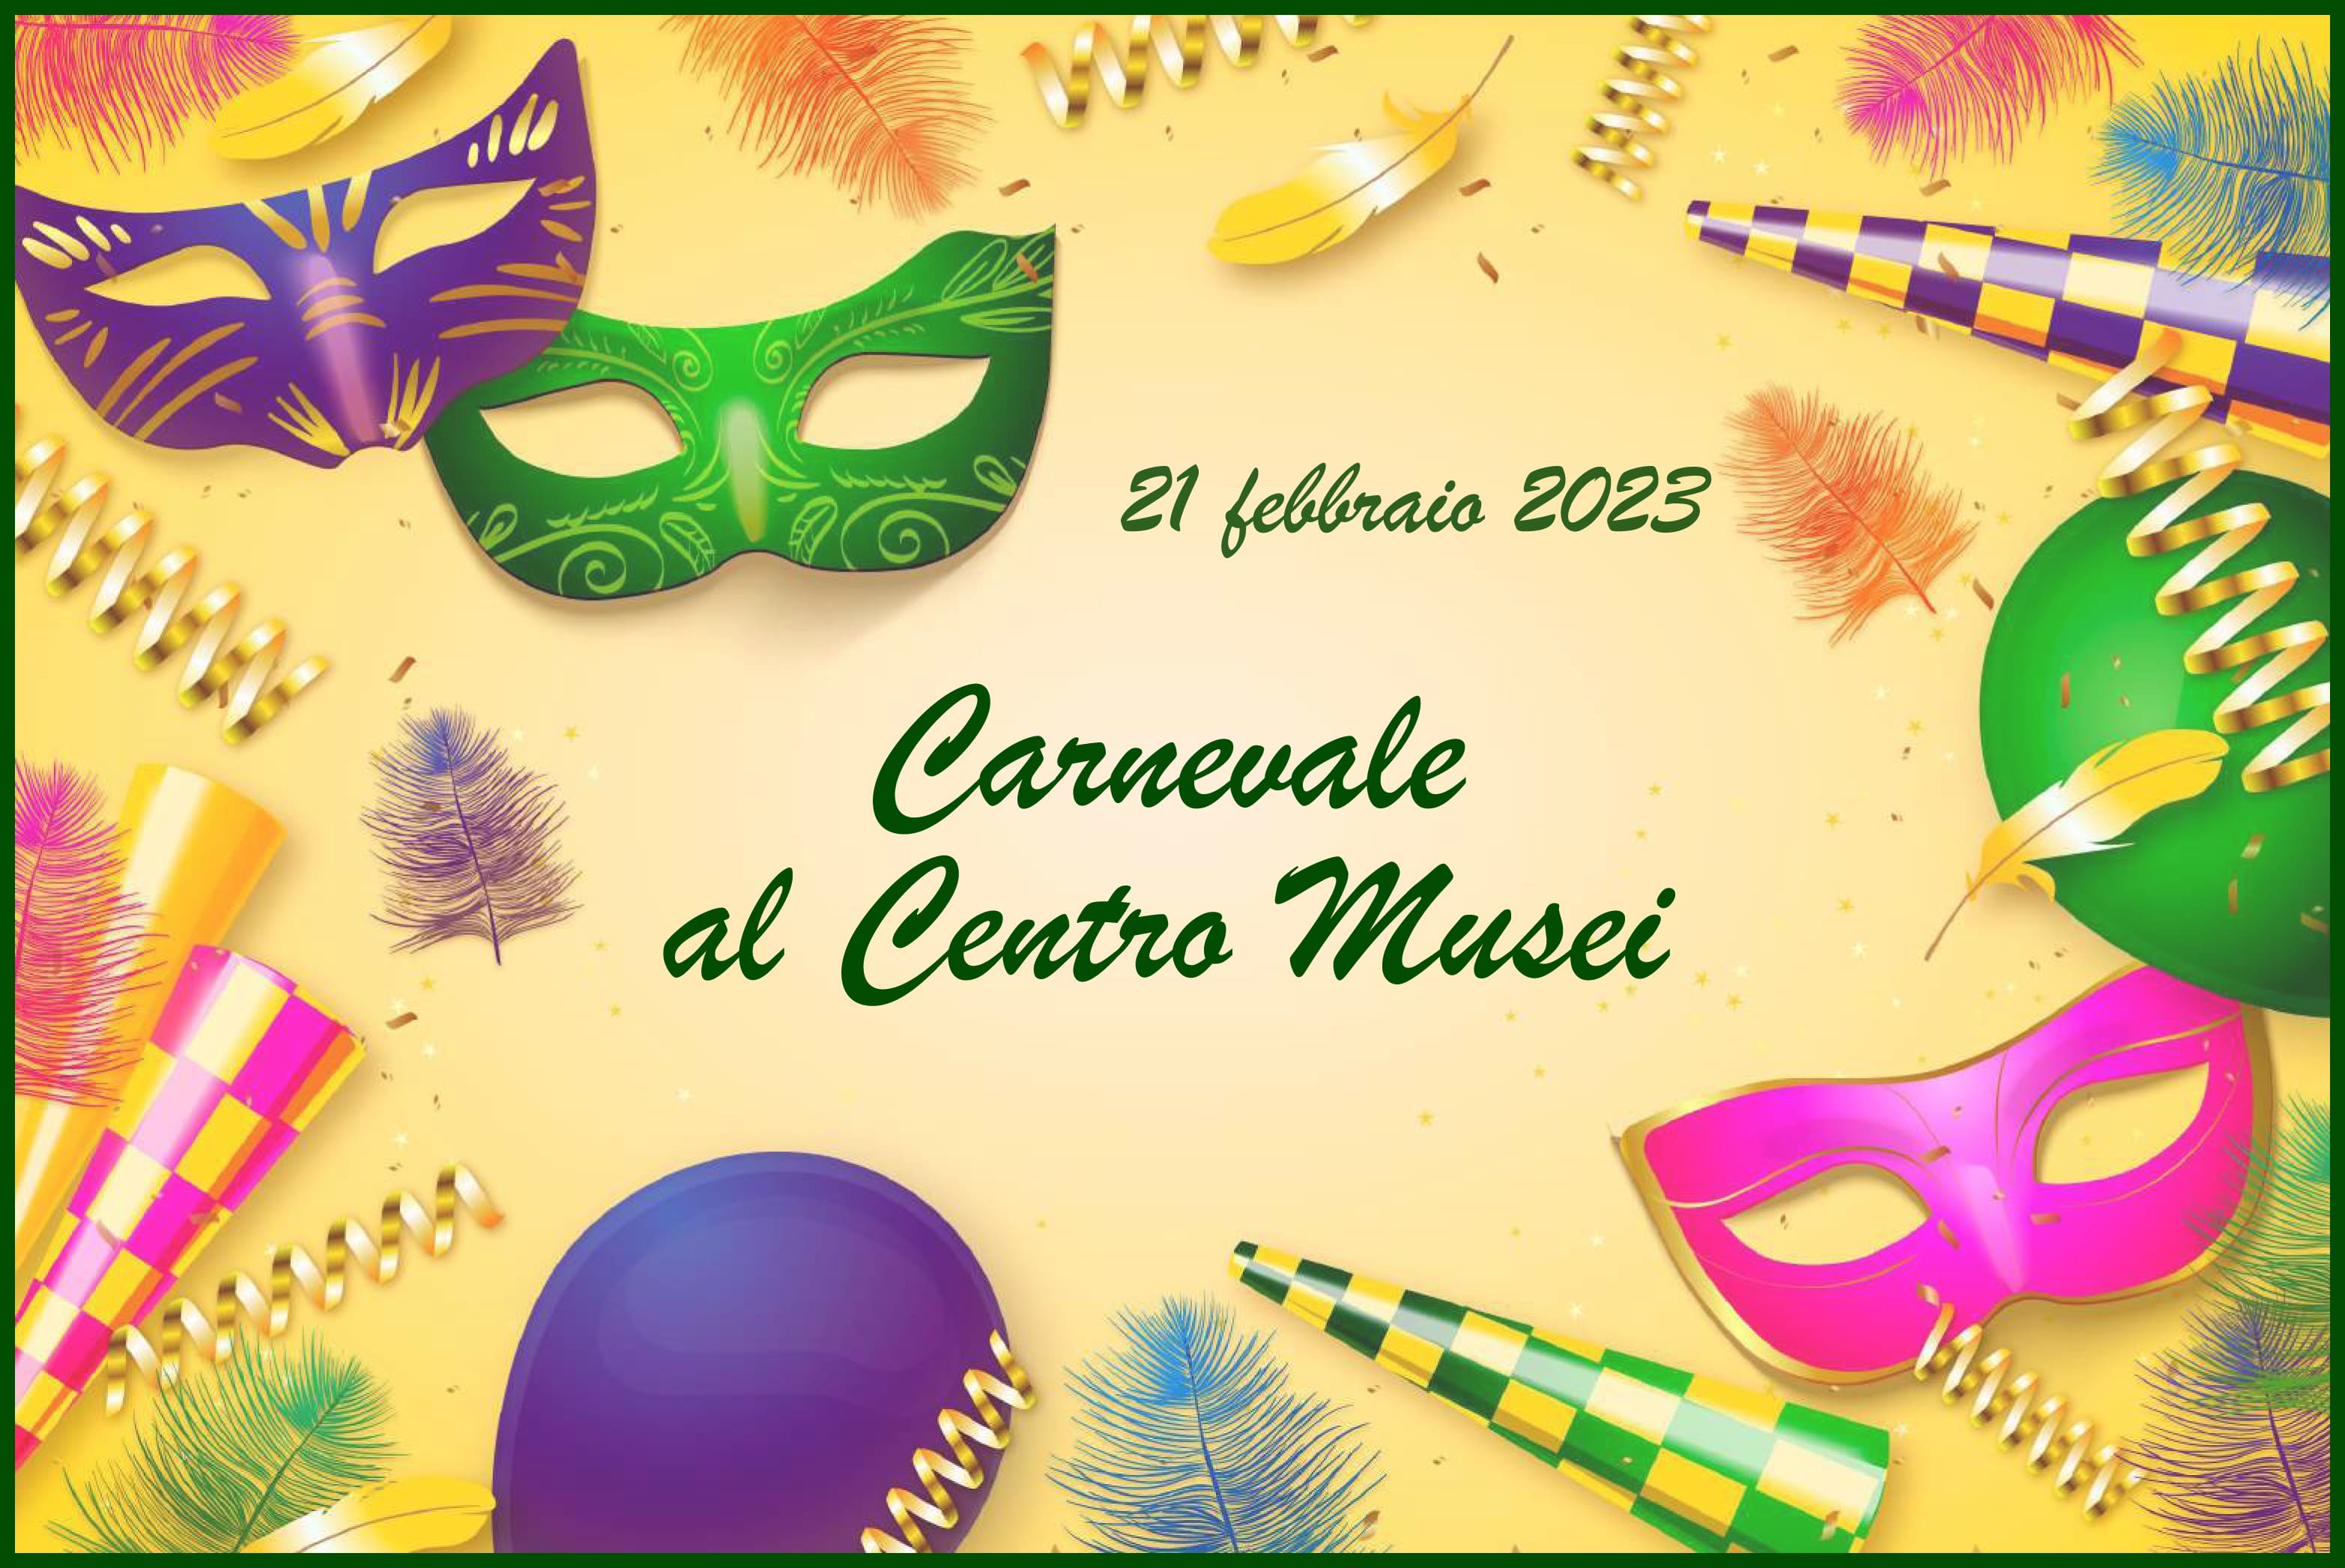 Carnevale_CM_2023_compressed.jpg